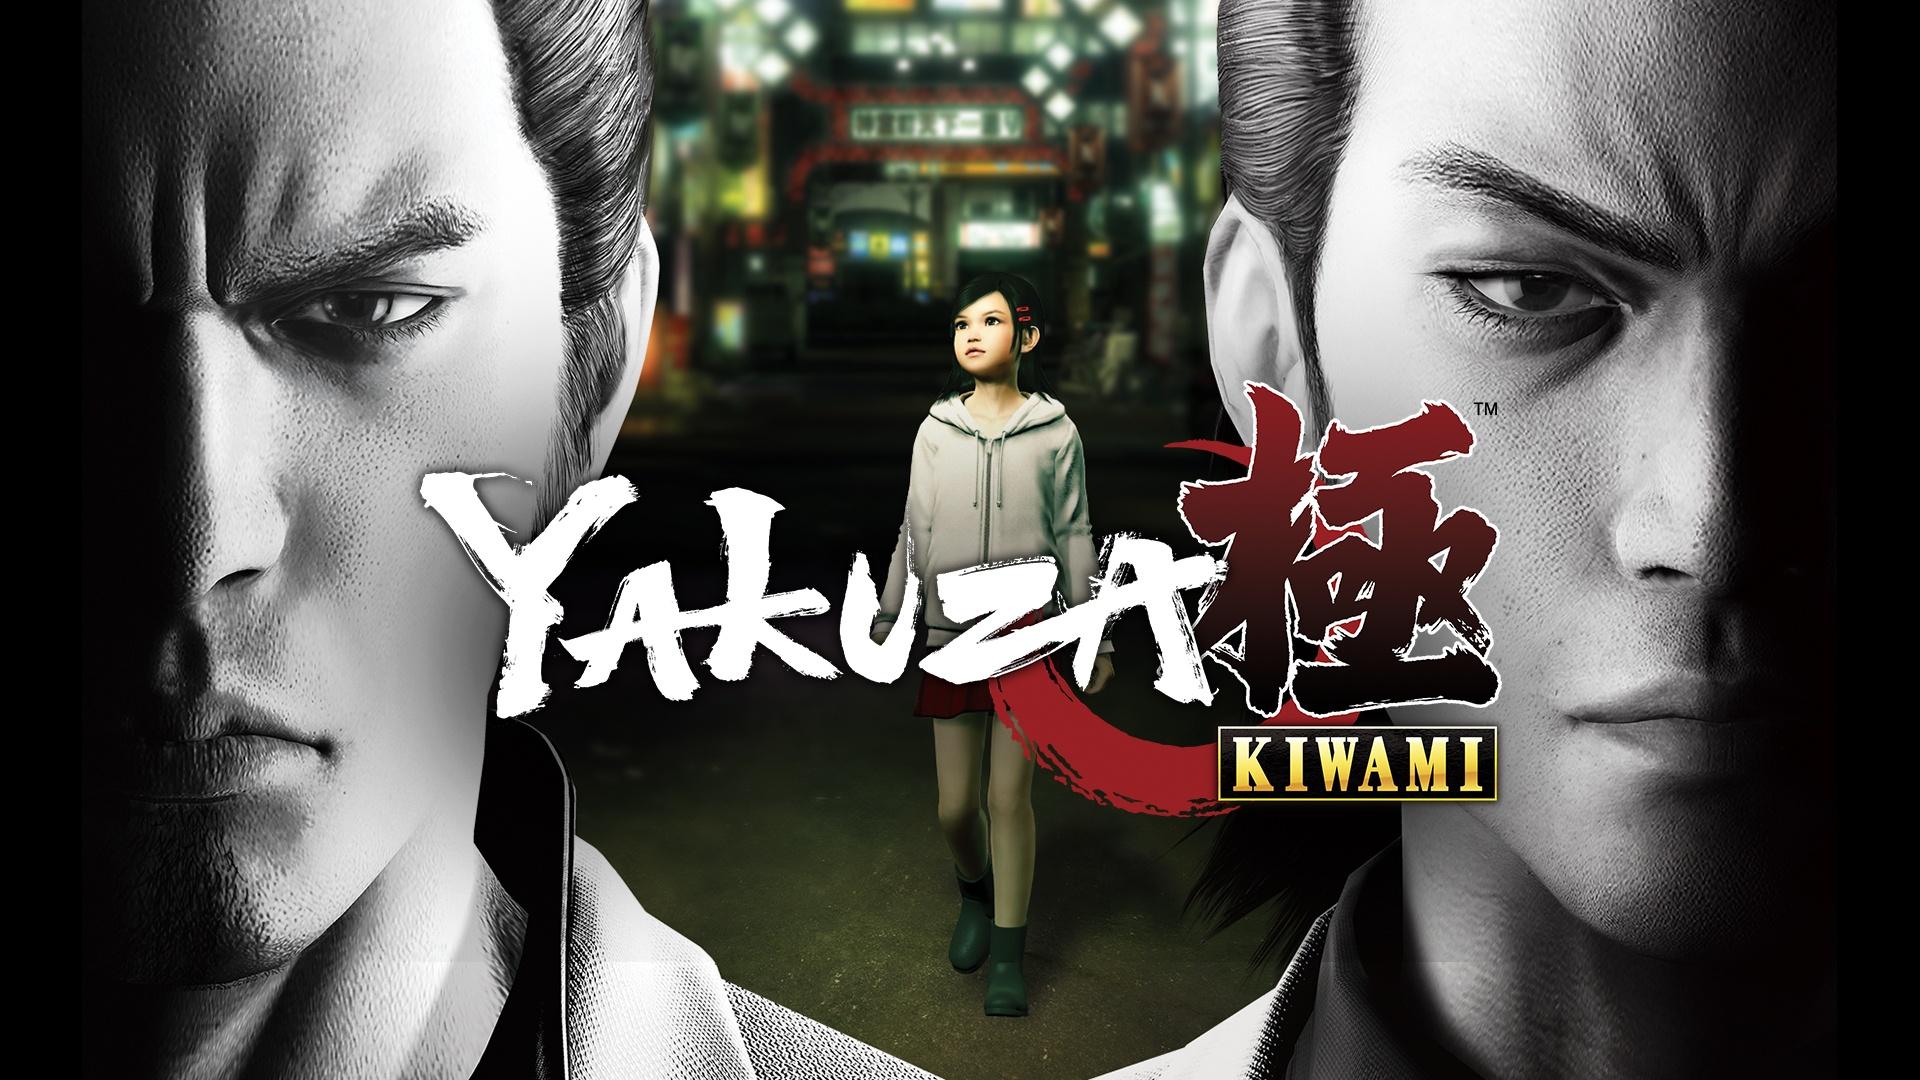 Yakuza Kiwami. PC Steam Game